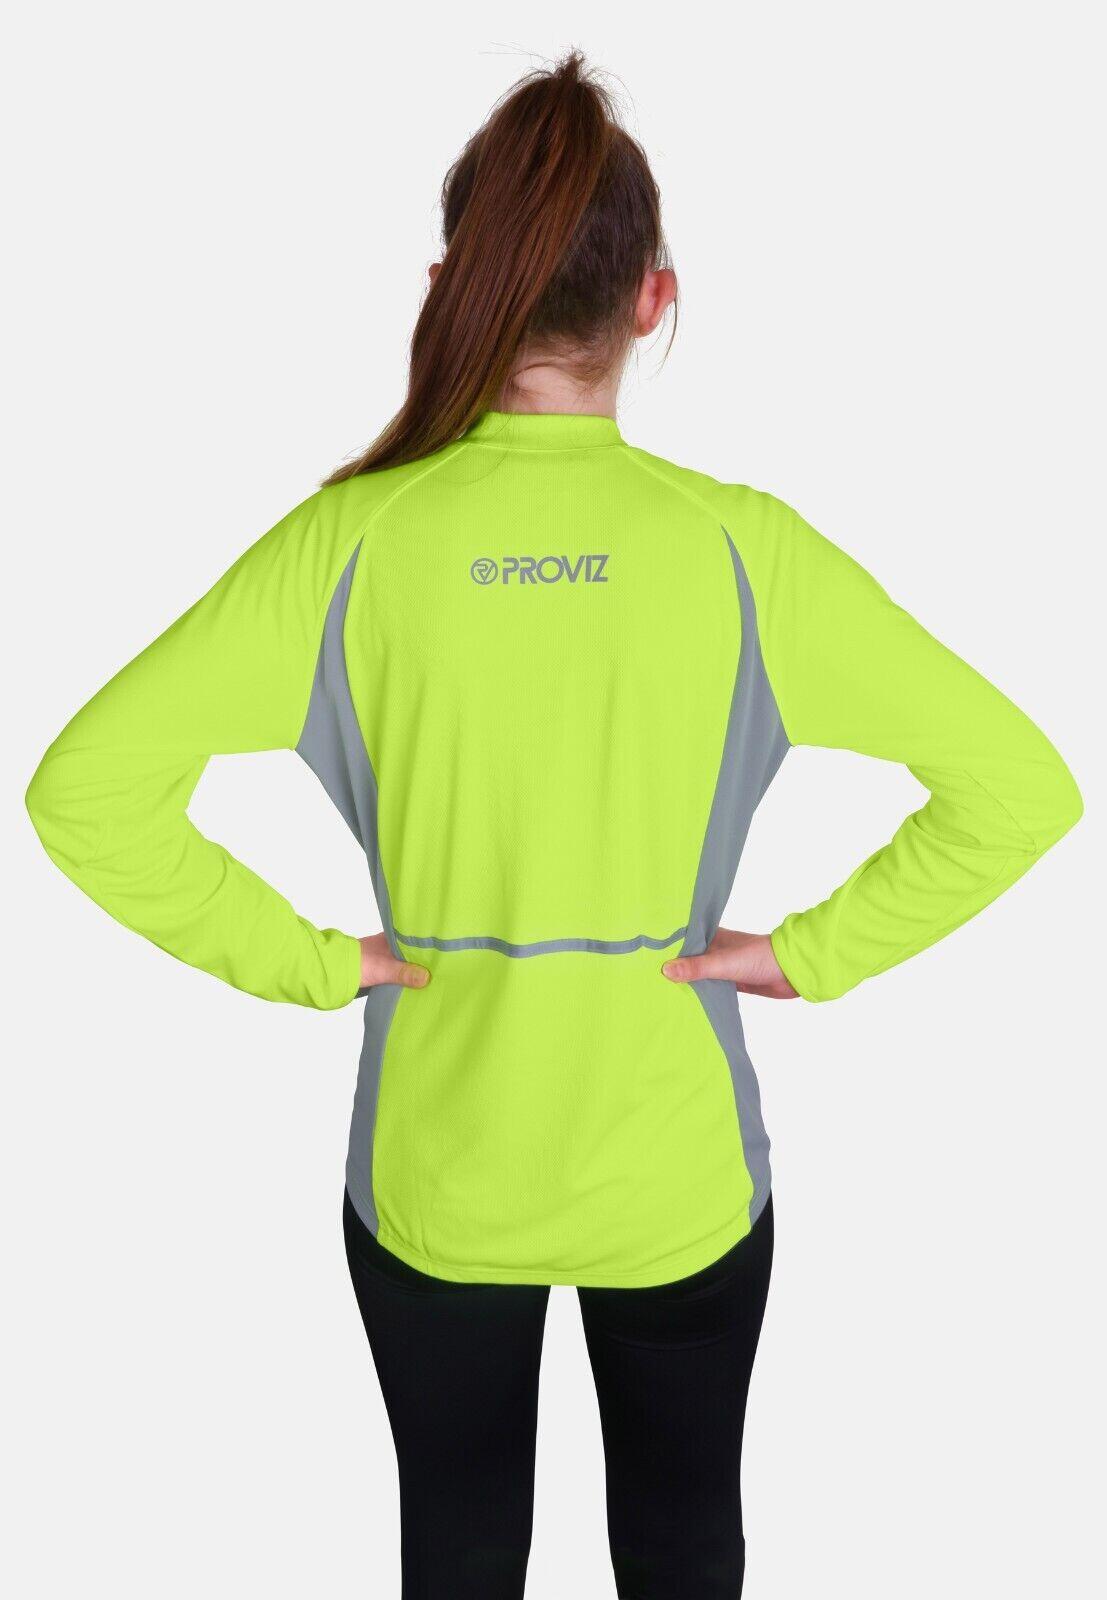 Proviz Classic Womens Sports T-Shirt Long Sleeve Reflective Activewear Top 4/6